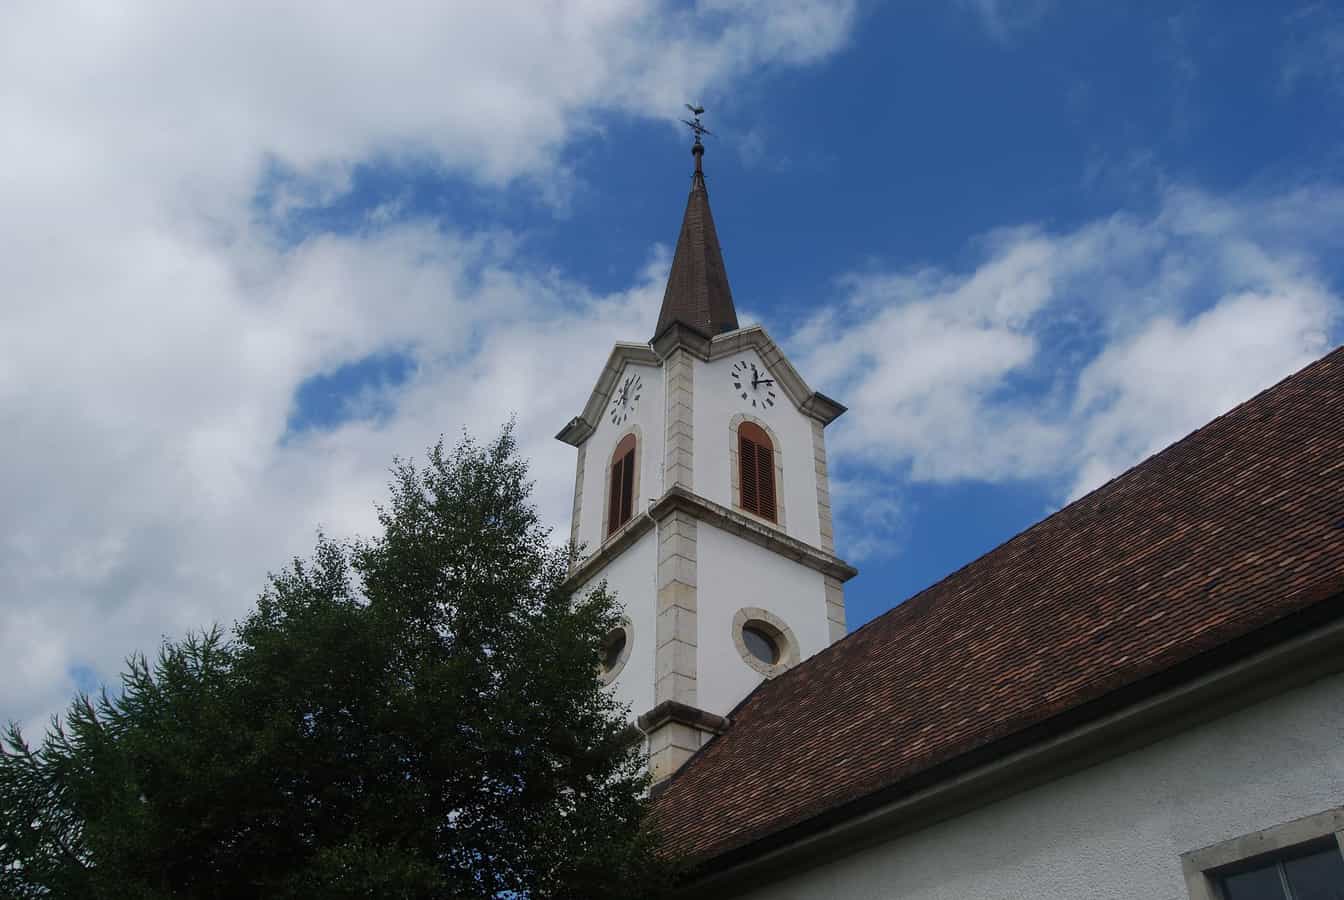 Church of Lajoux, canton of Jura, Switzerland